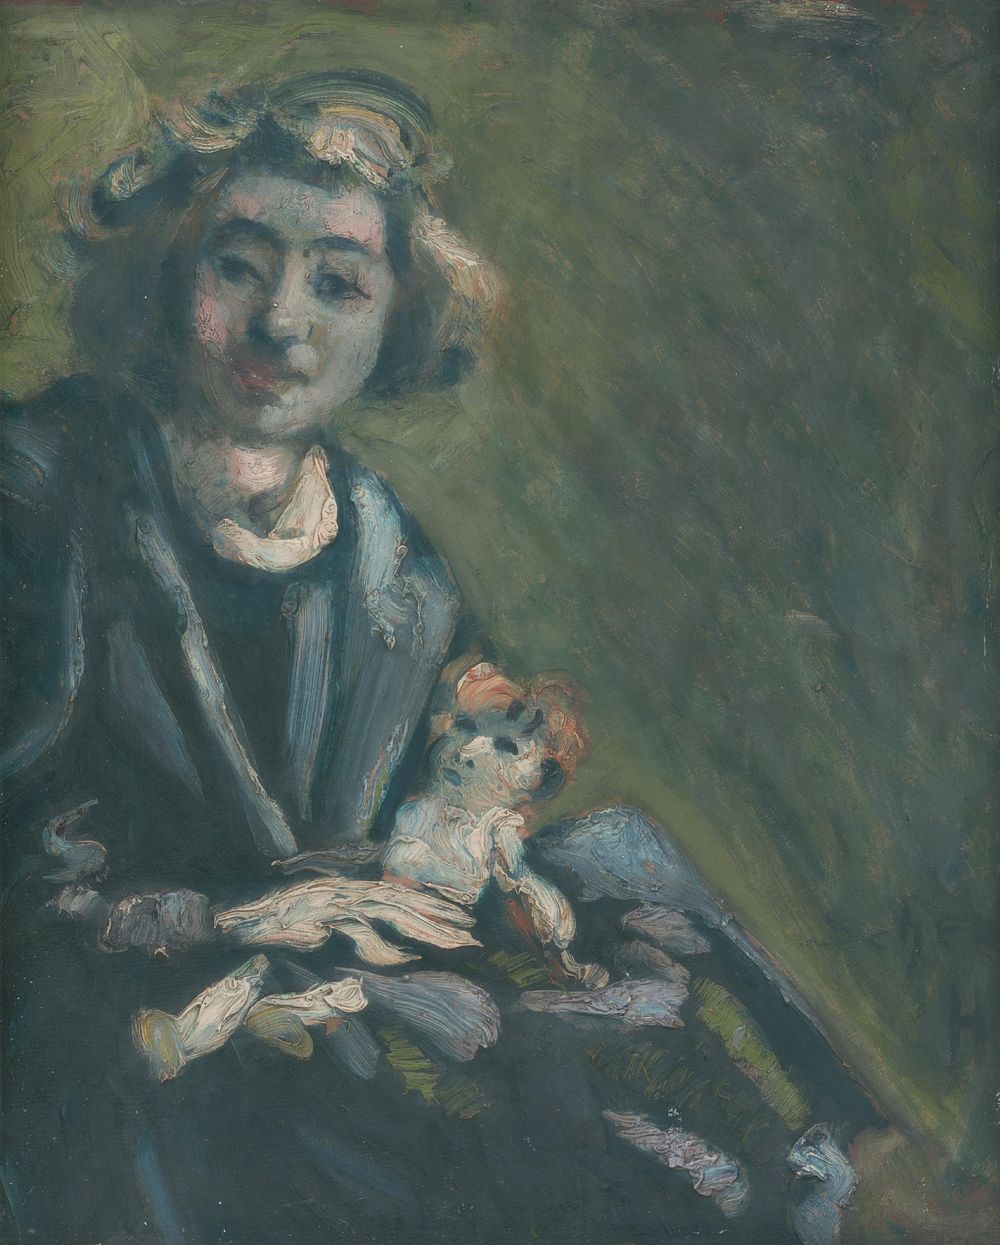 A girl with a doll, Hugo Scheiber